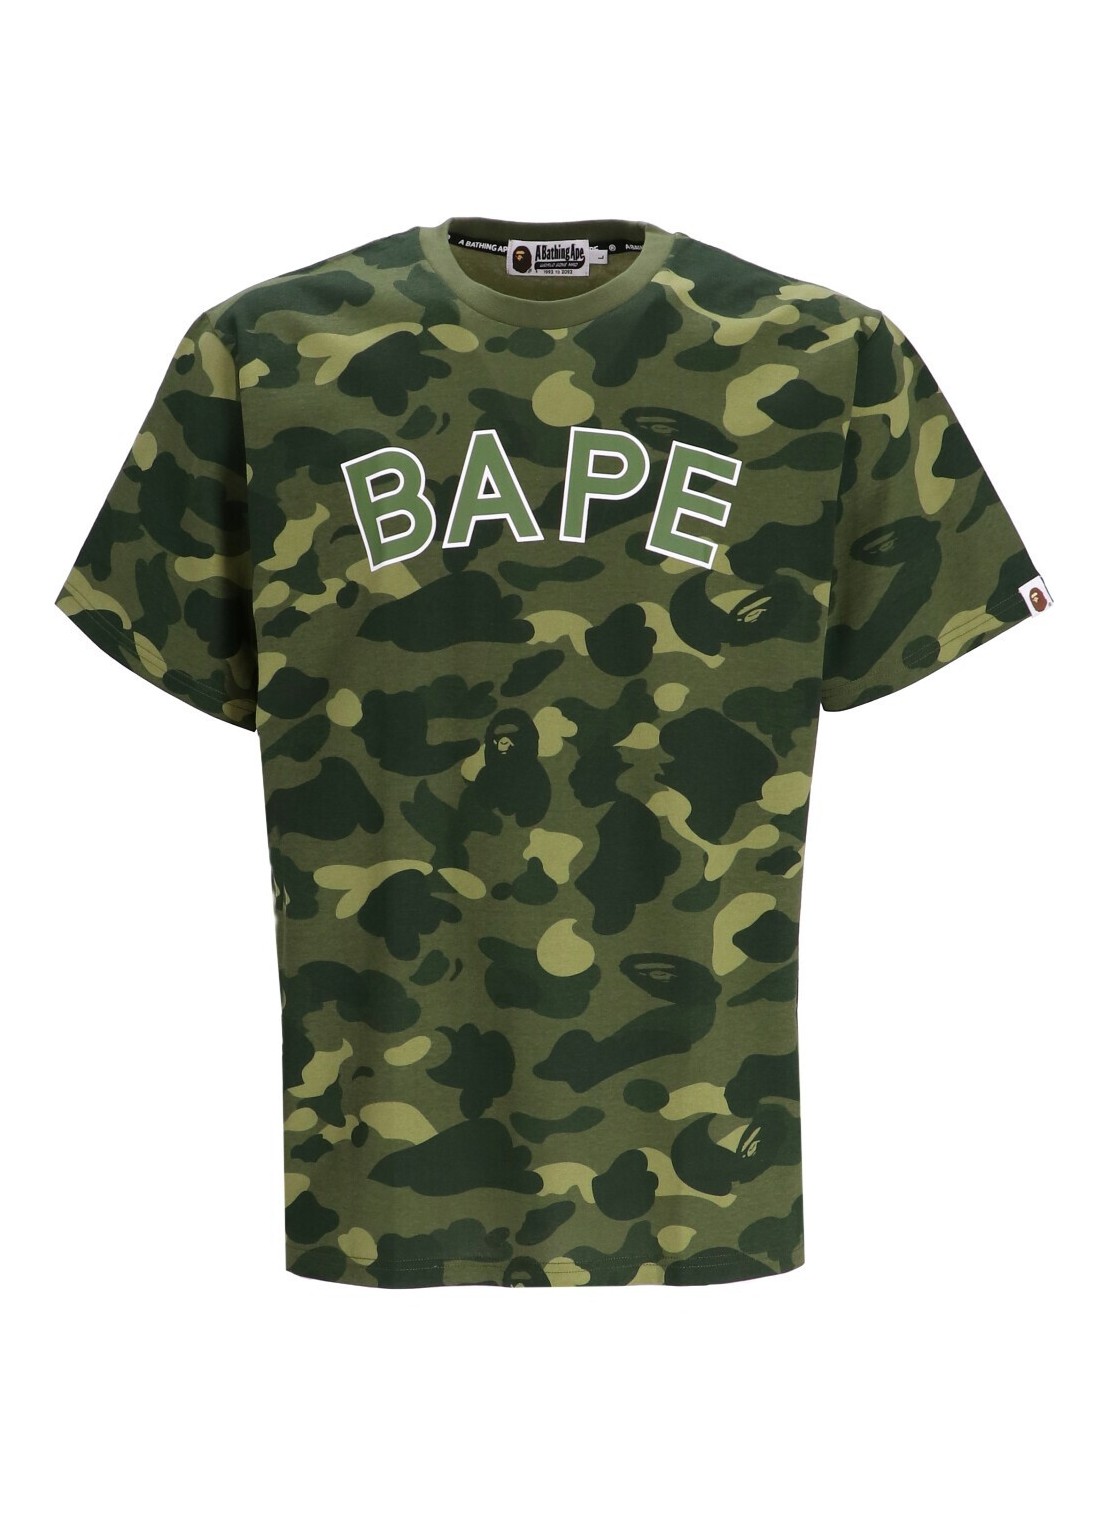 Camiseta bape t-shirt man color camo bape tee m 001csi801003m green talla L
 